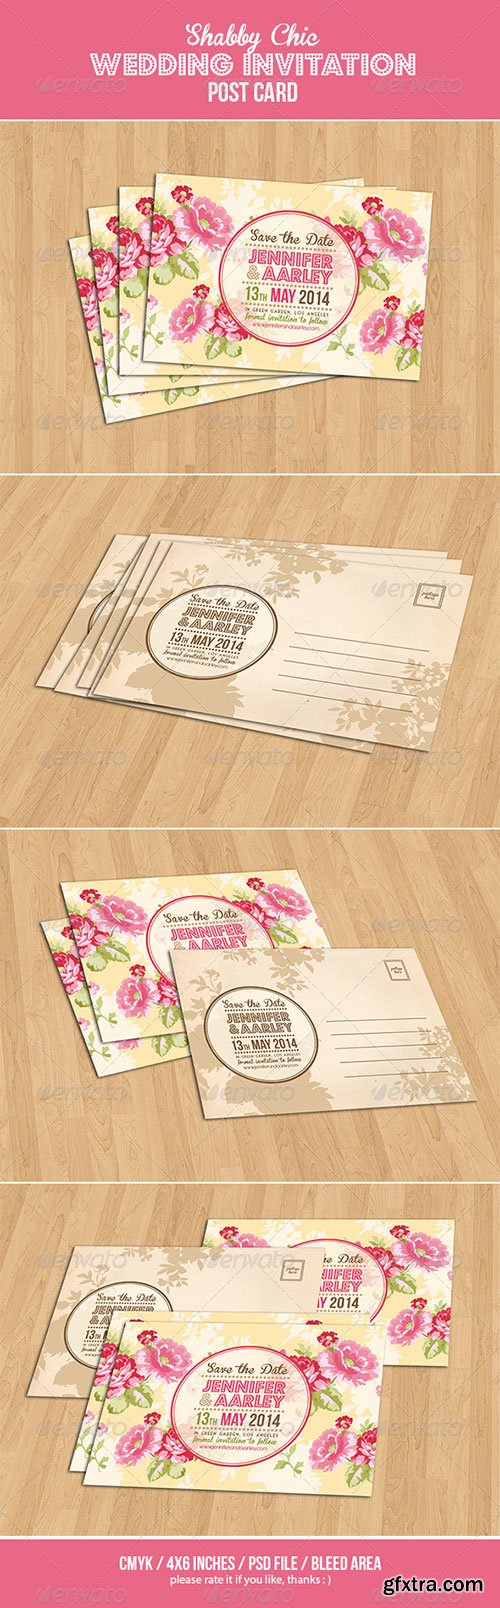 GraphicRiver - Shabby Chic Wedding Invitation Post Card